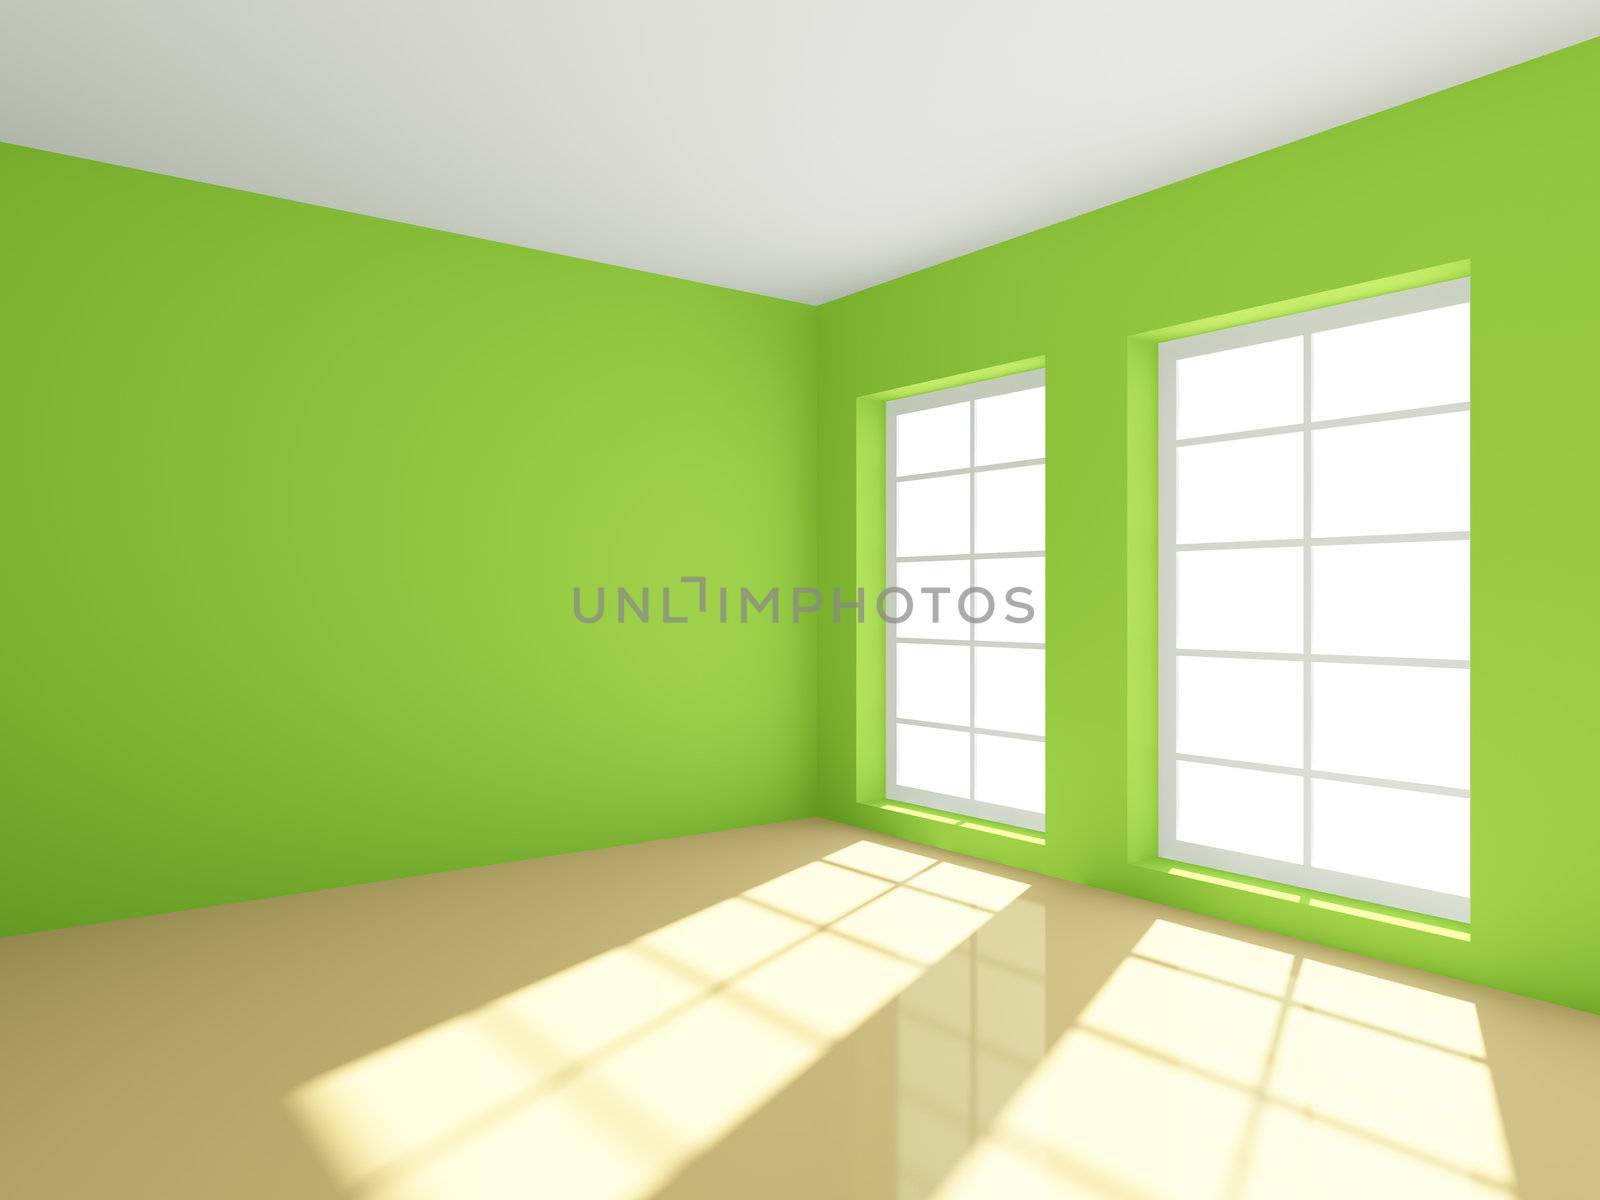 Green Empty Room by maxkrasnov